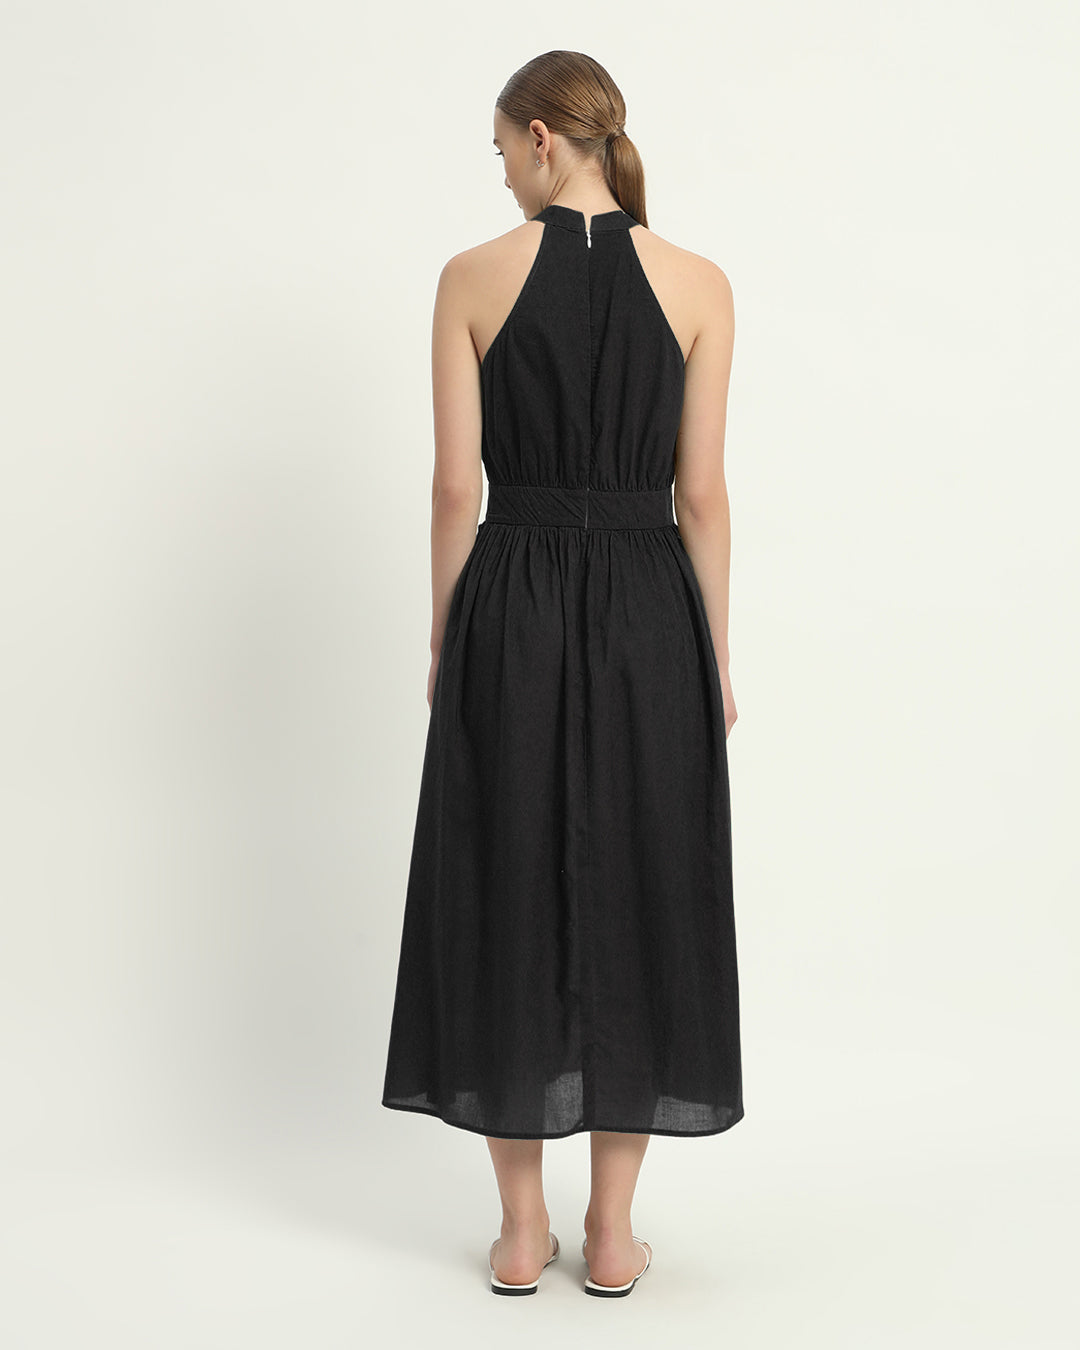 The Massena Noir Cotton Dress